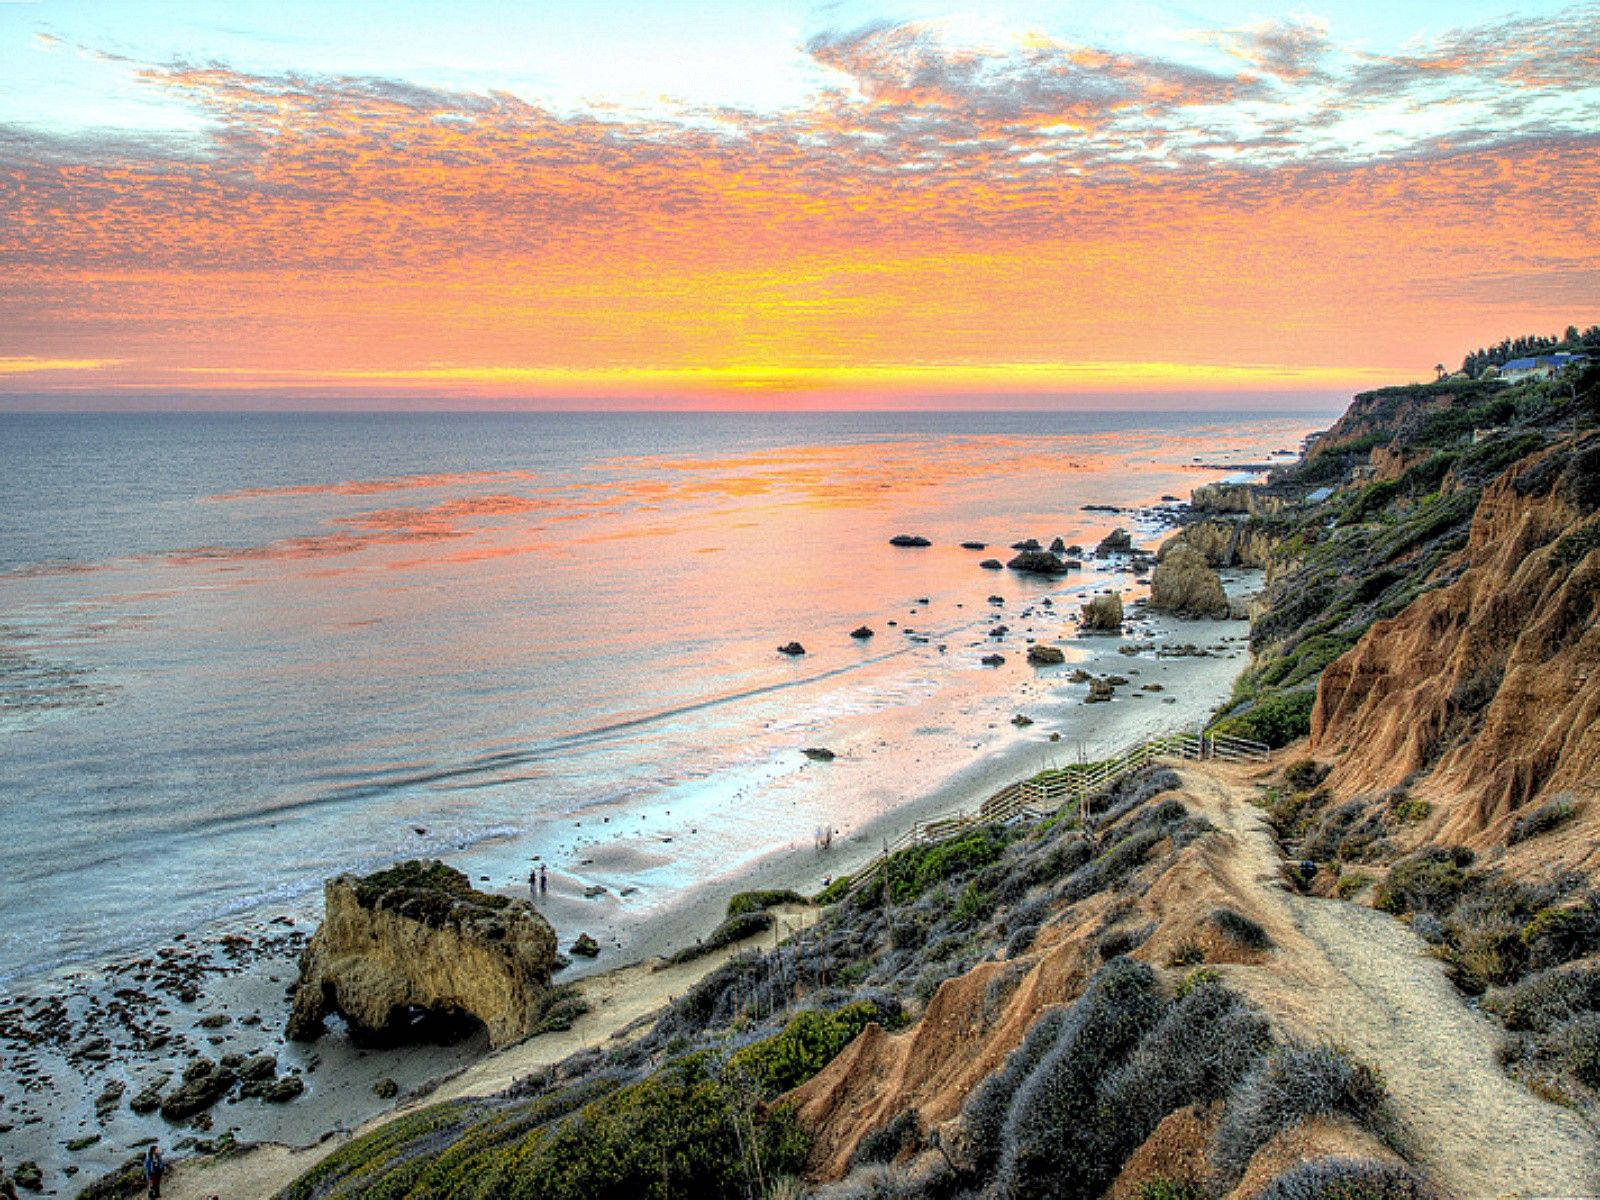 Laimpresionante Vista De La Playa En Malibú, California. Fondo de pantalla